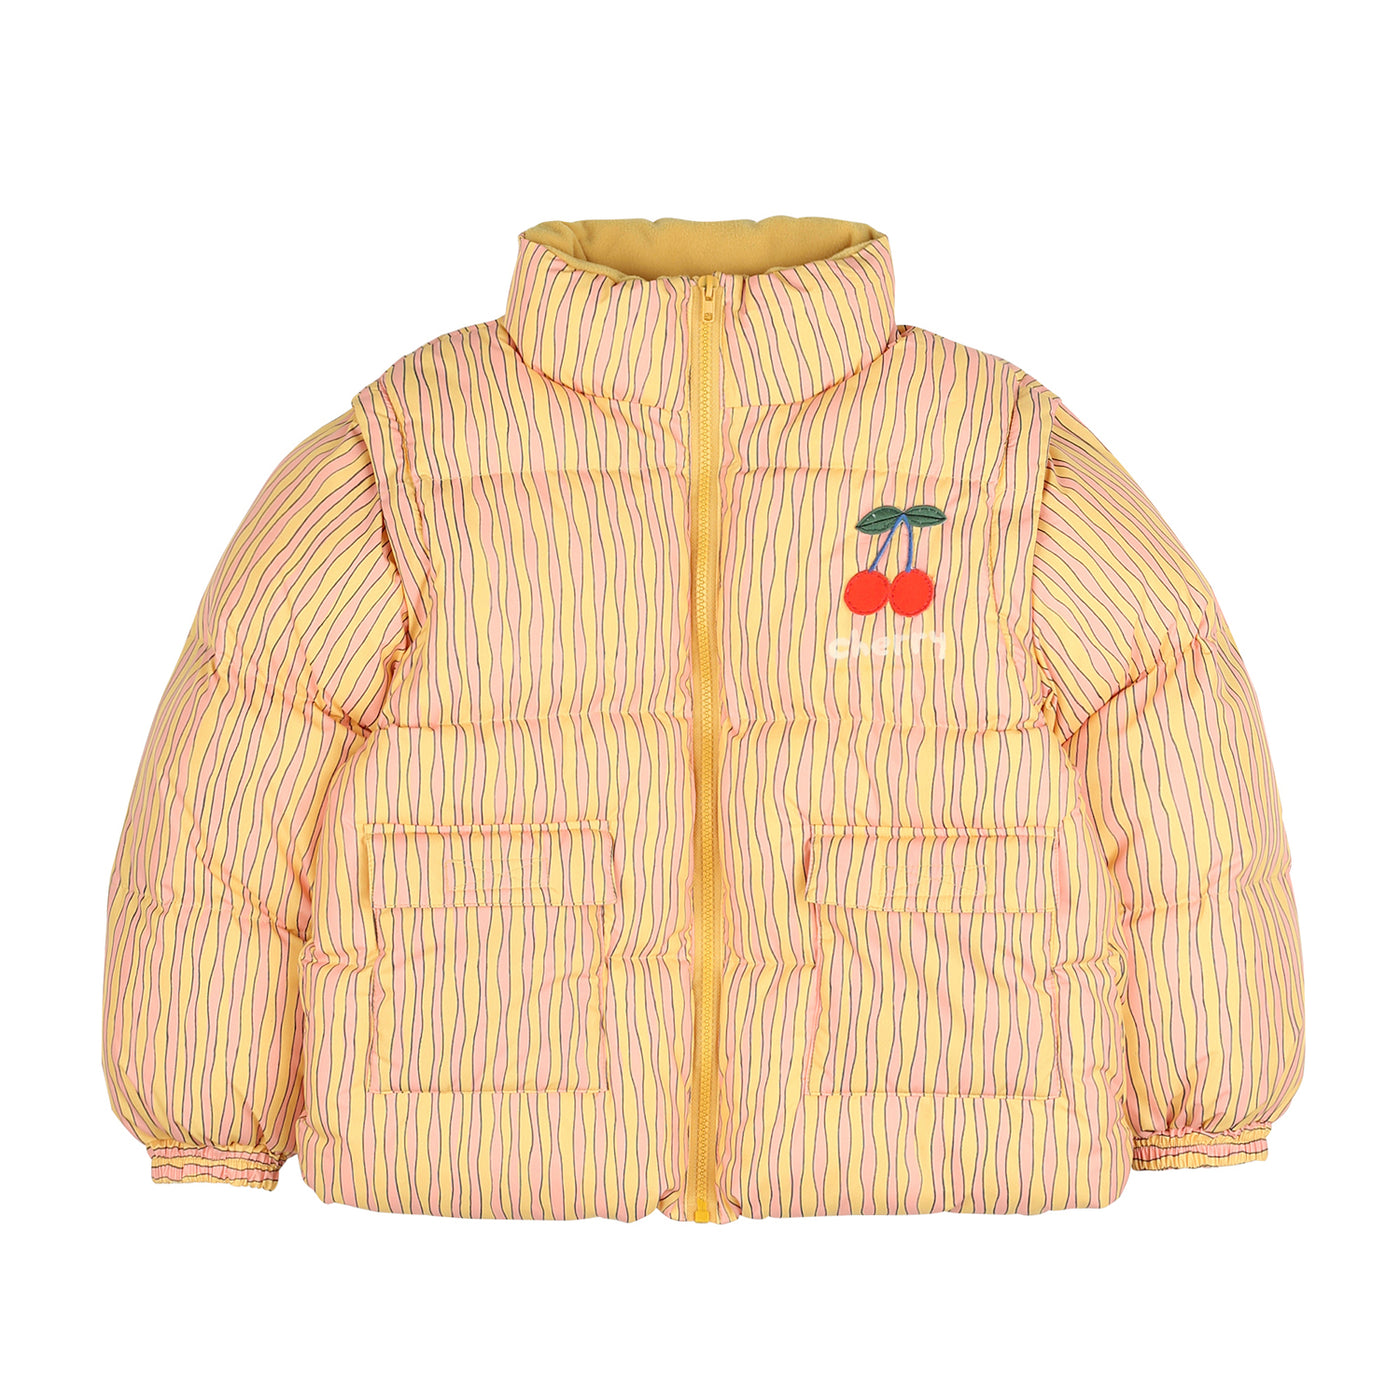 Jelly Mallow - Padded jacket wave / many sizes